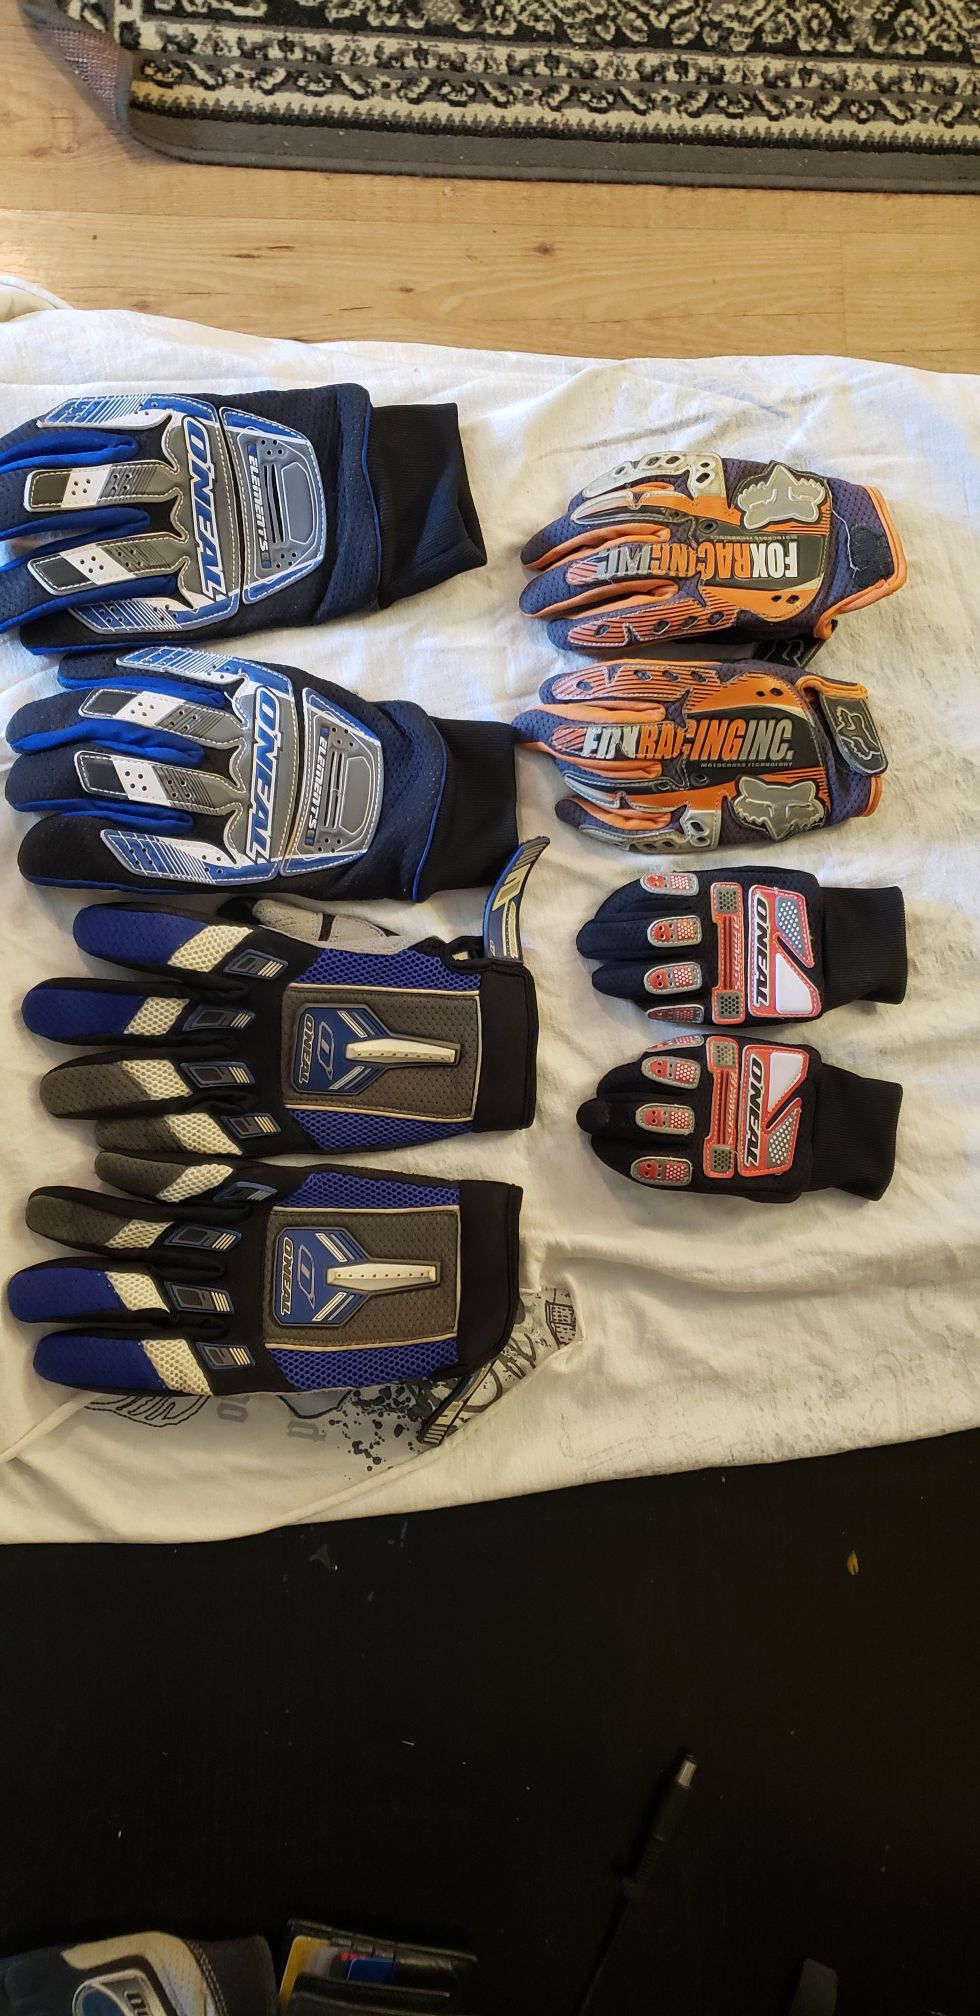 Dirt bike gloves